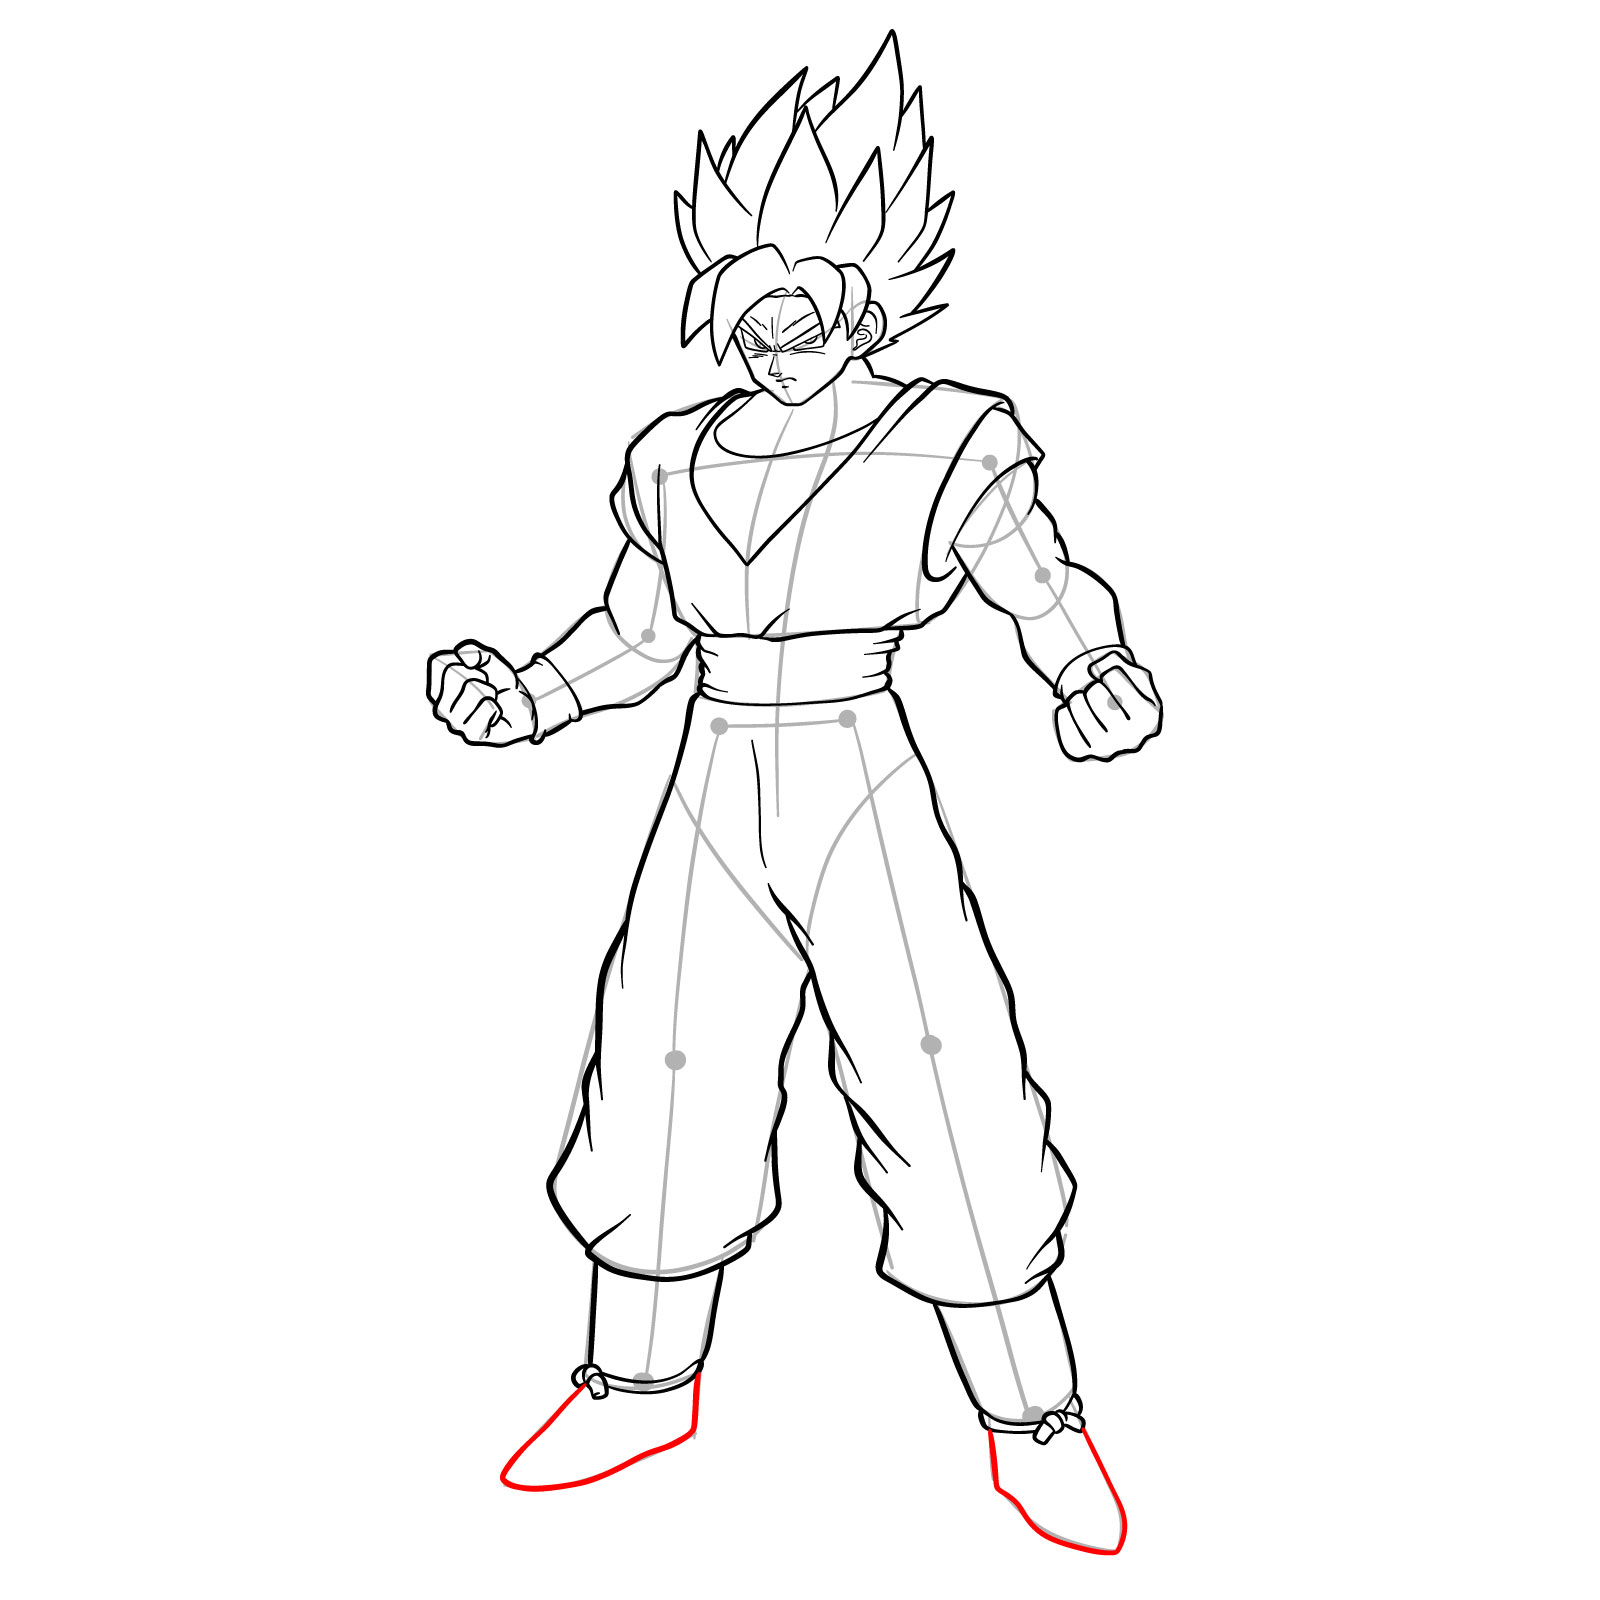 How to draw Goku in Super Saiyan form - step 32